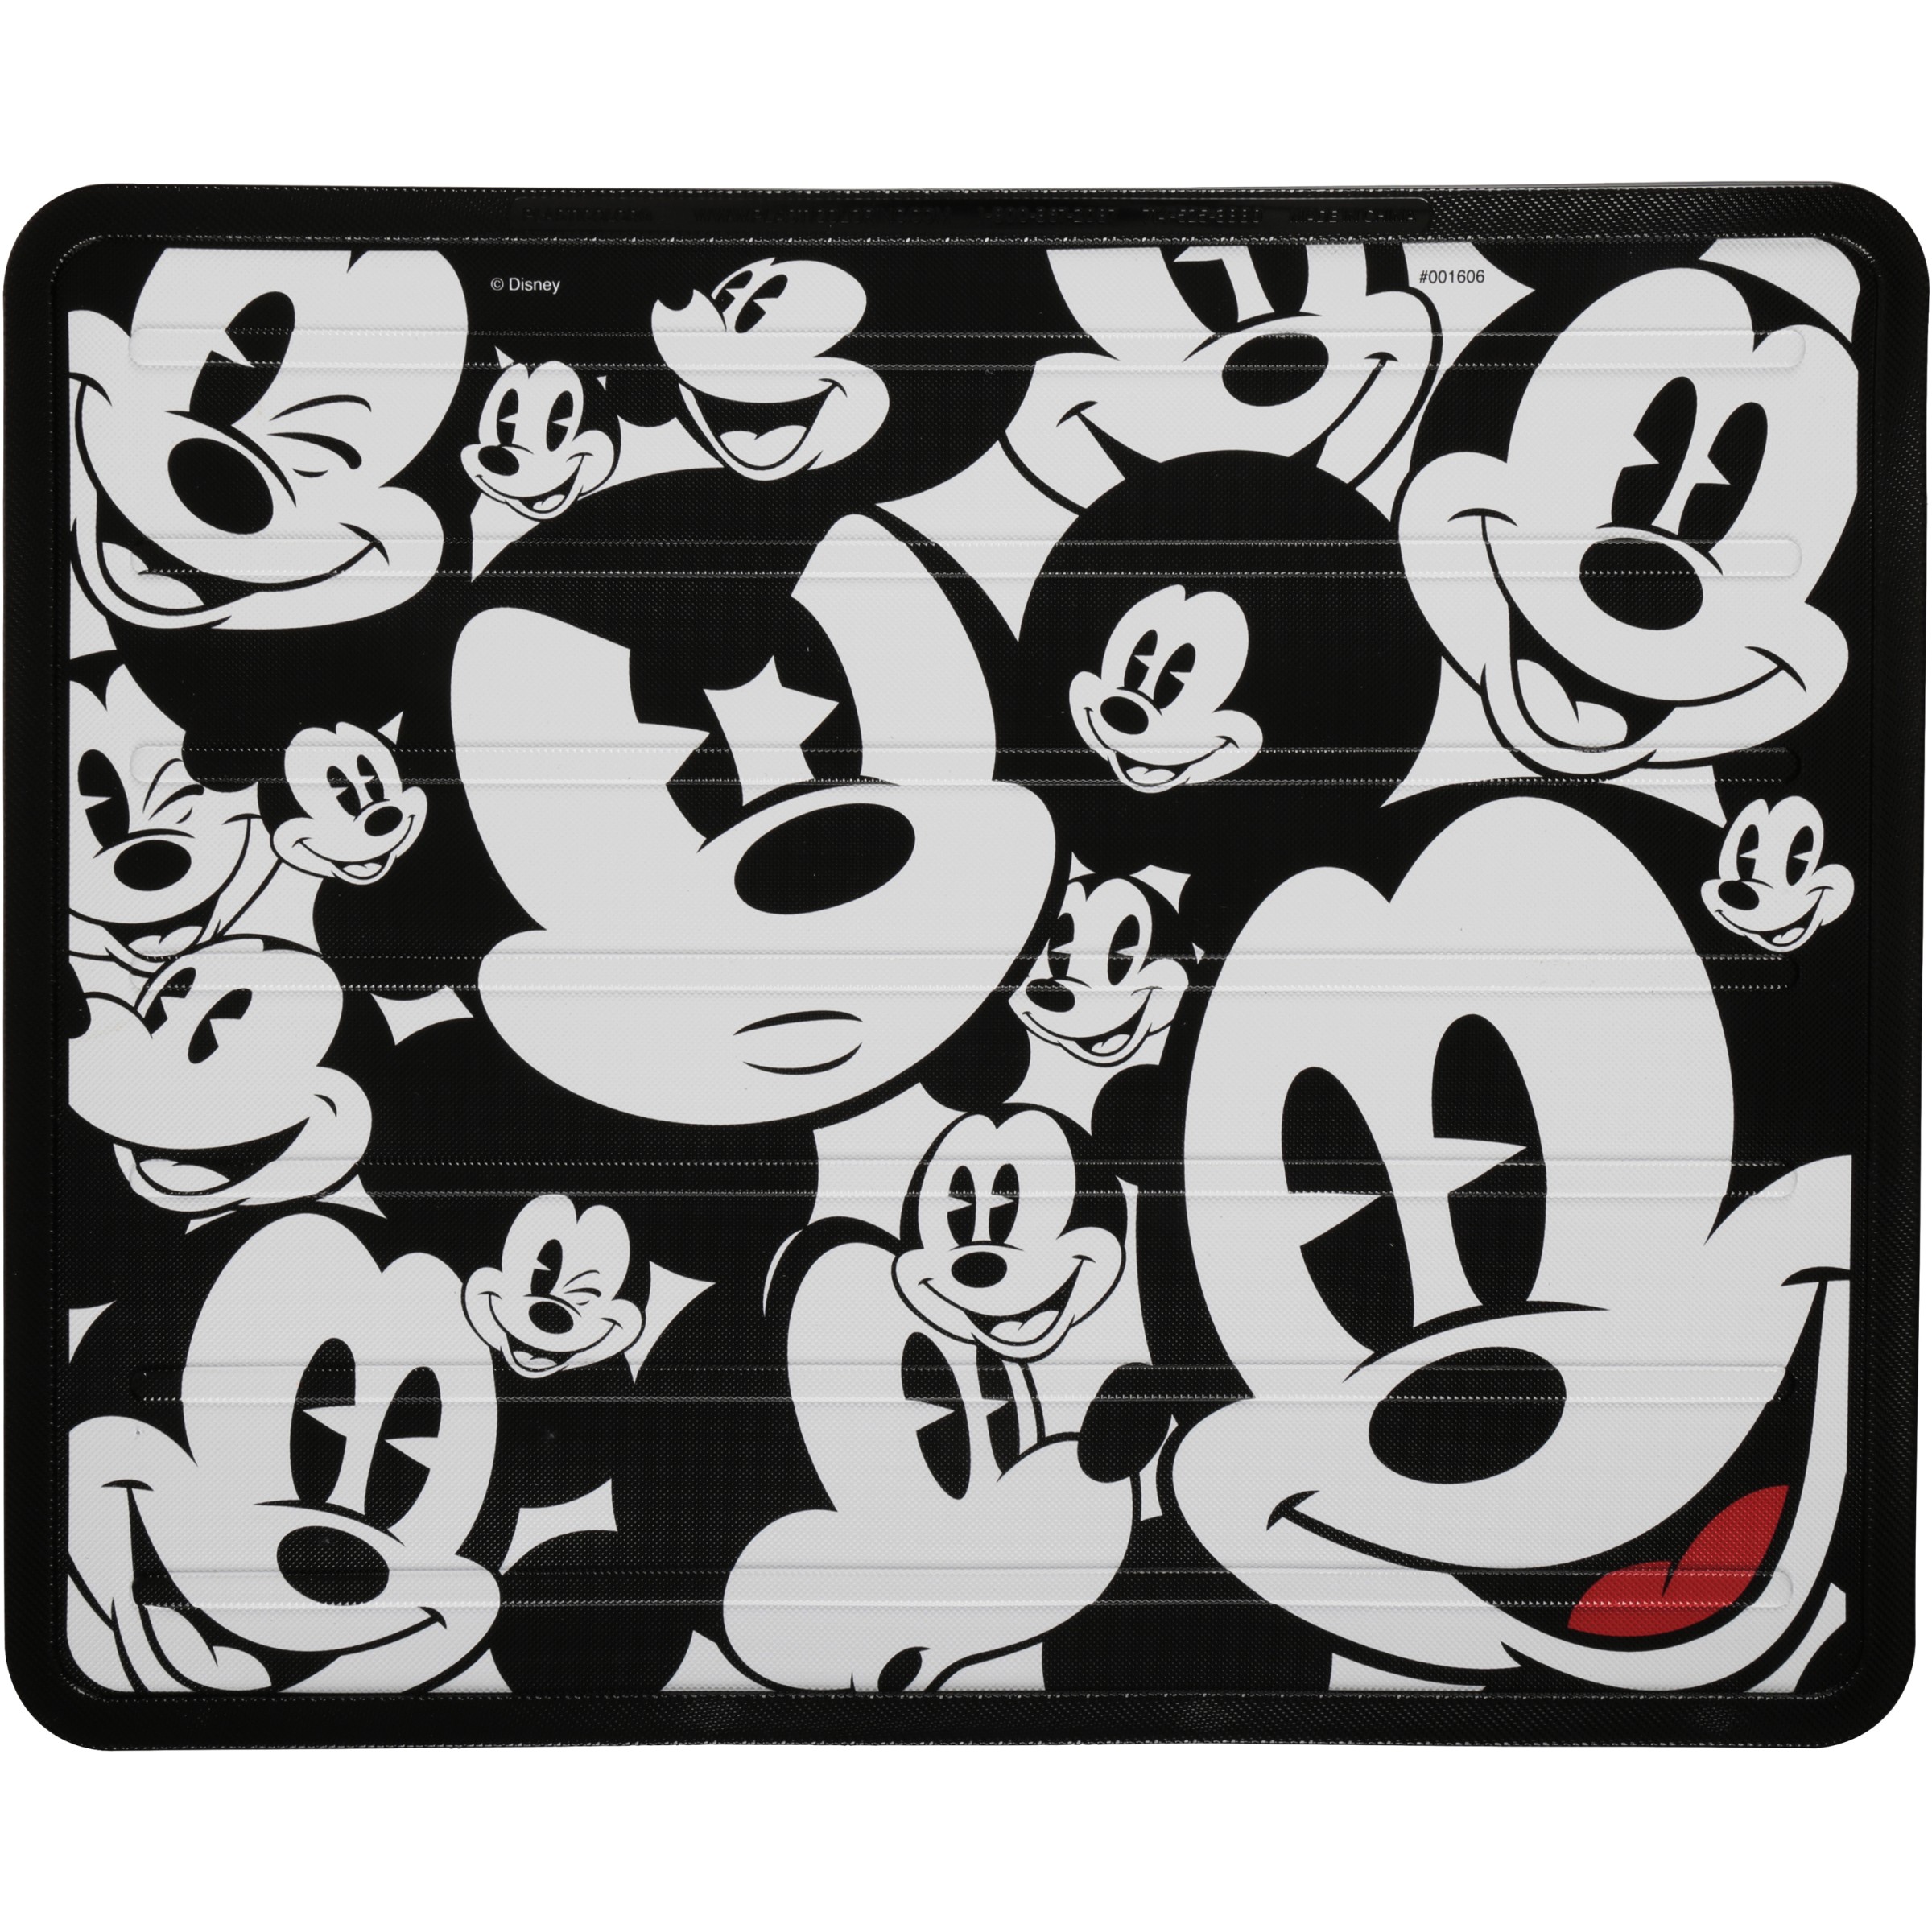 Plasticolor Mickey Mouse Universal Fit Automotive Utility Mat, Vinyl, Black, 1 Piece - image 1 of 4